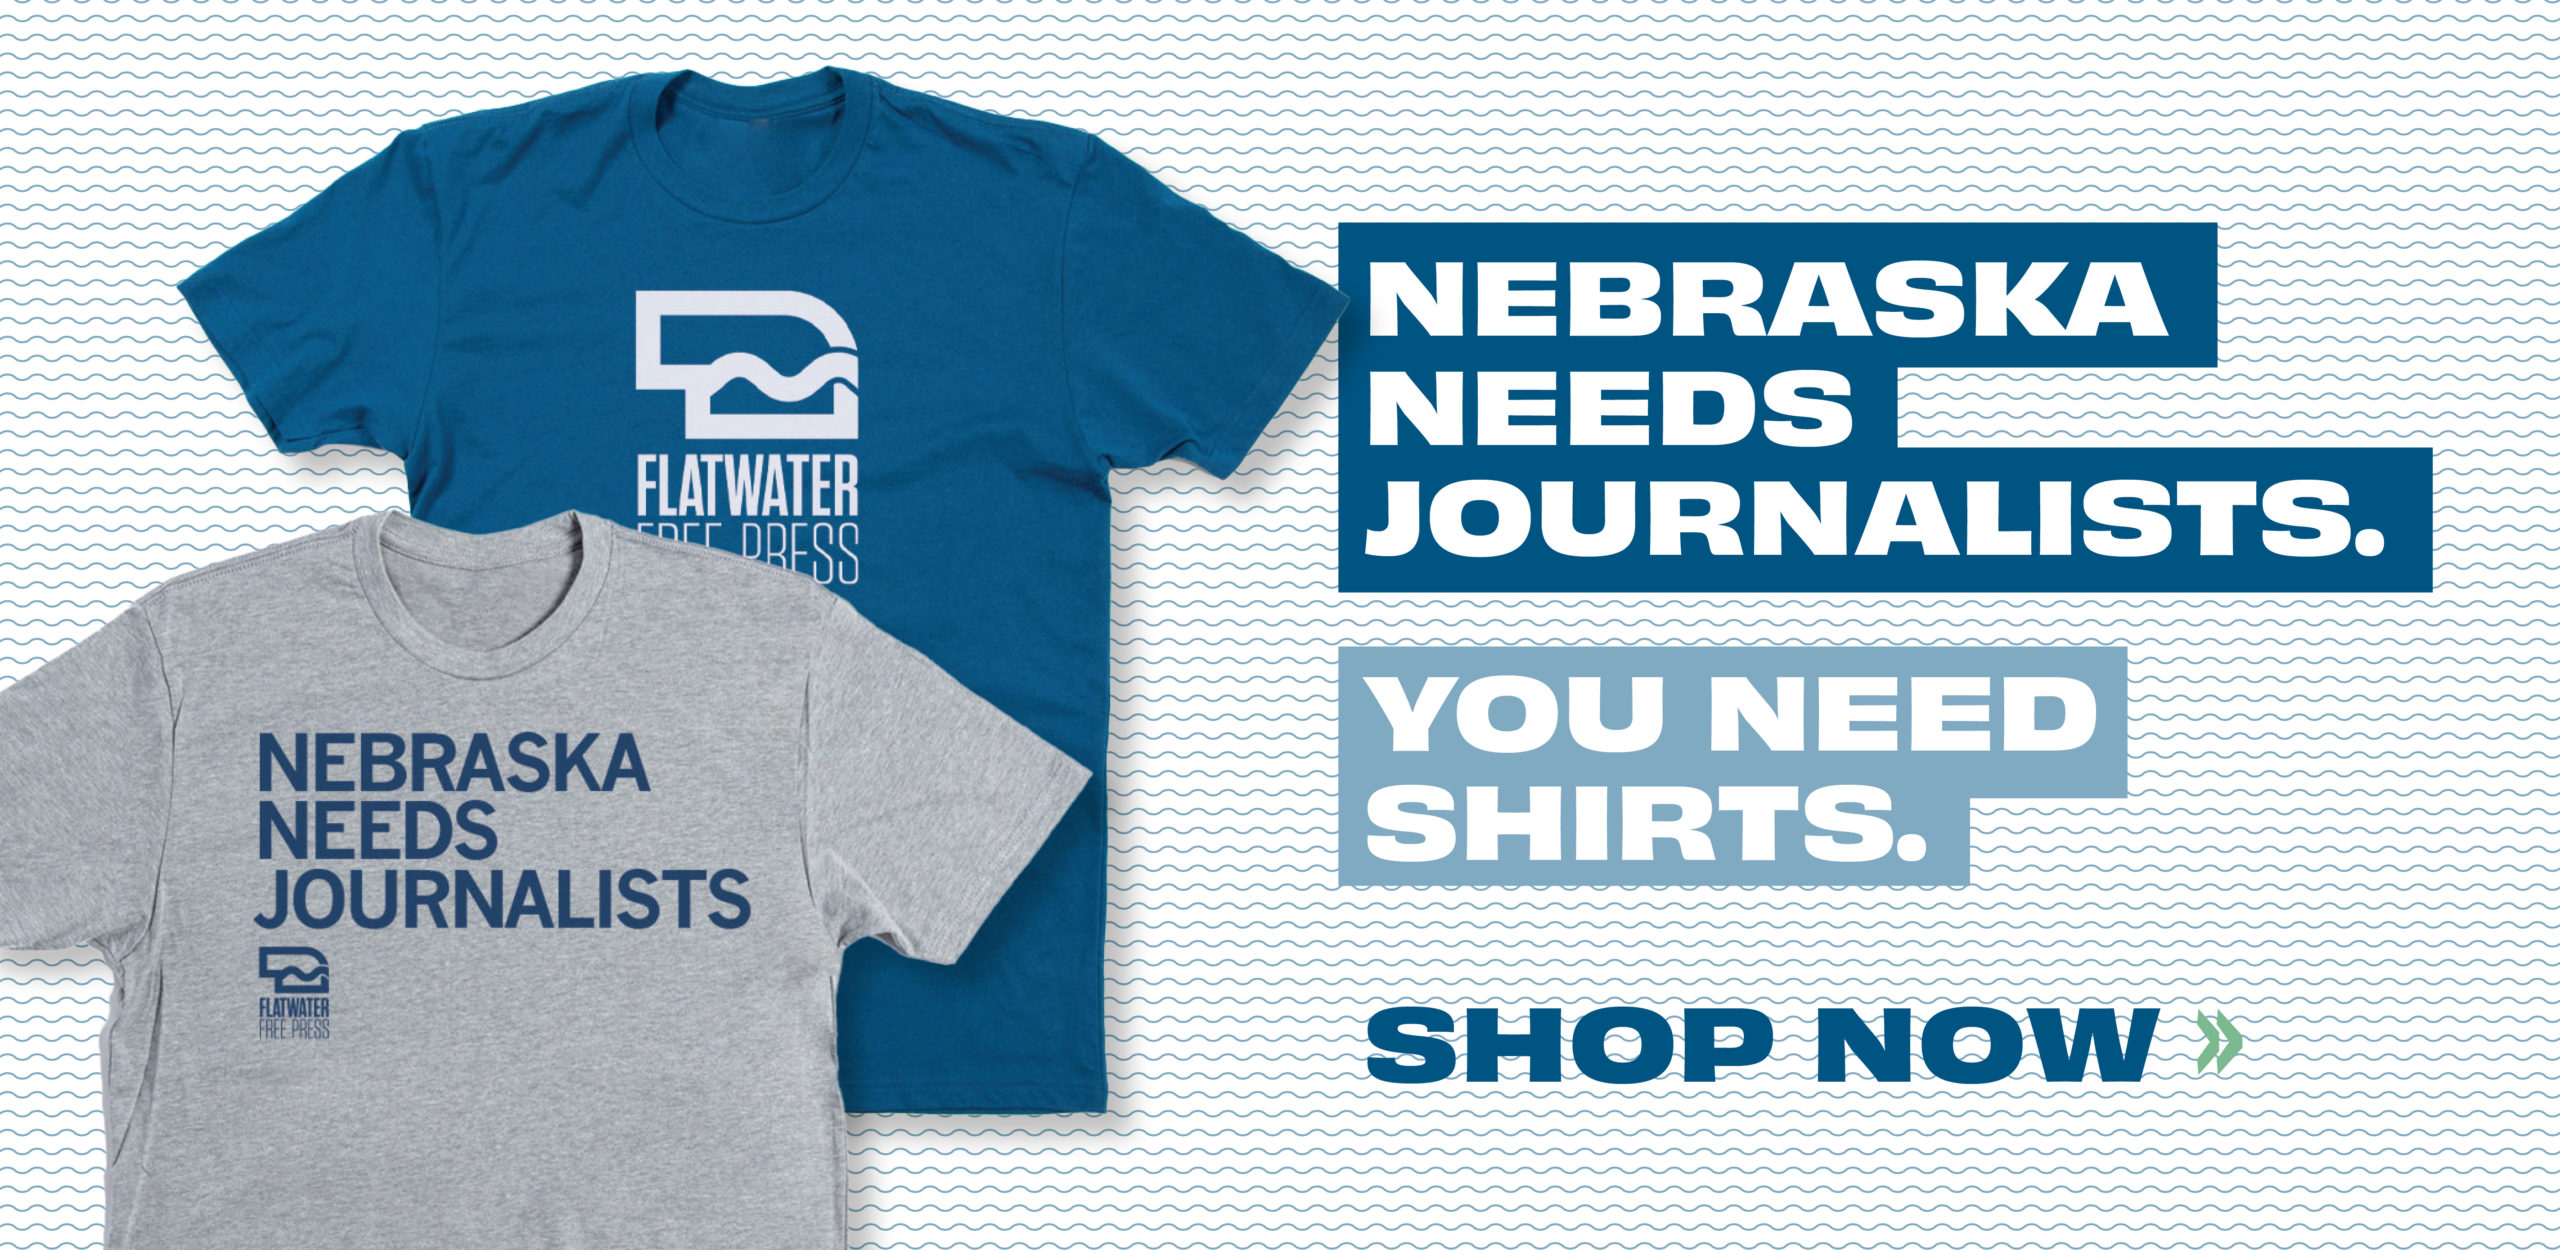 Nebraska needs journalists. You need shirts. Shop now »